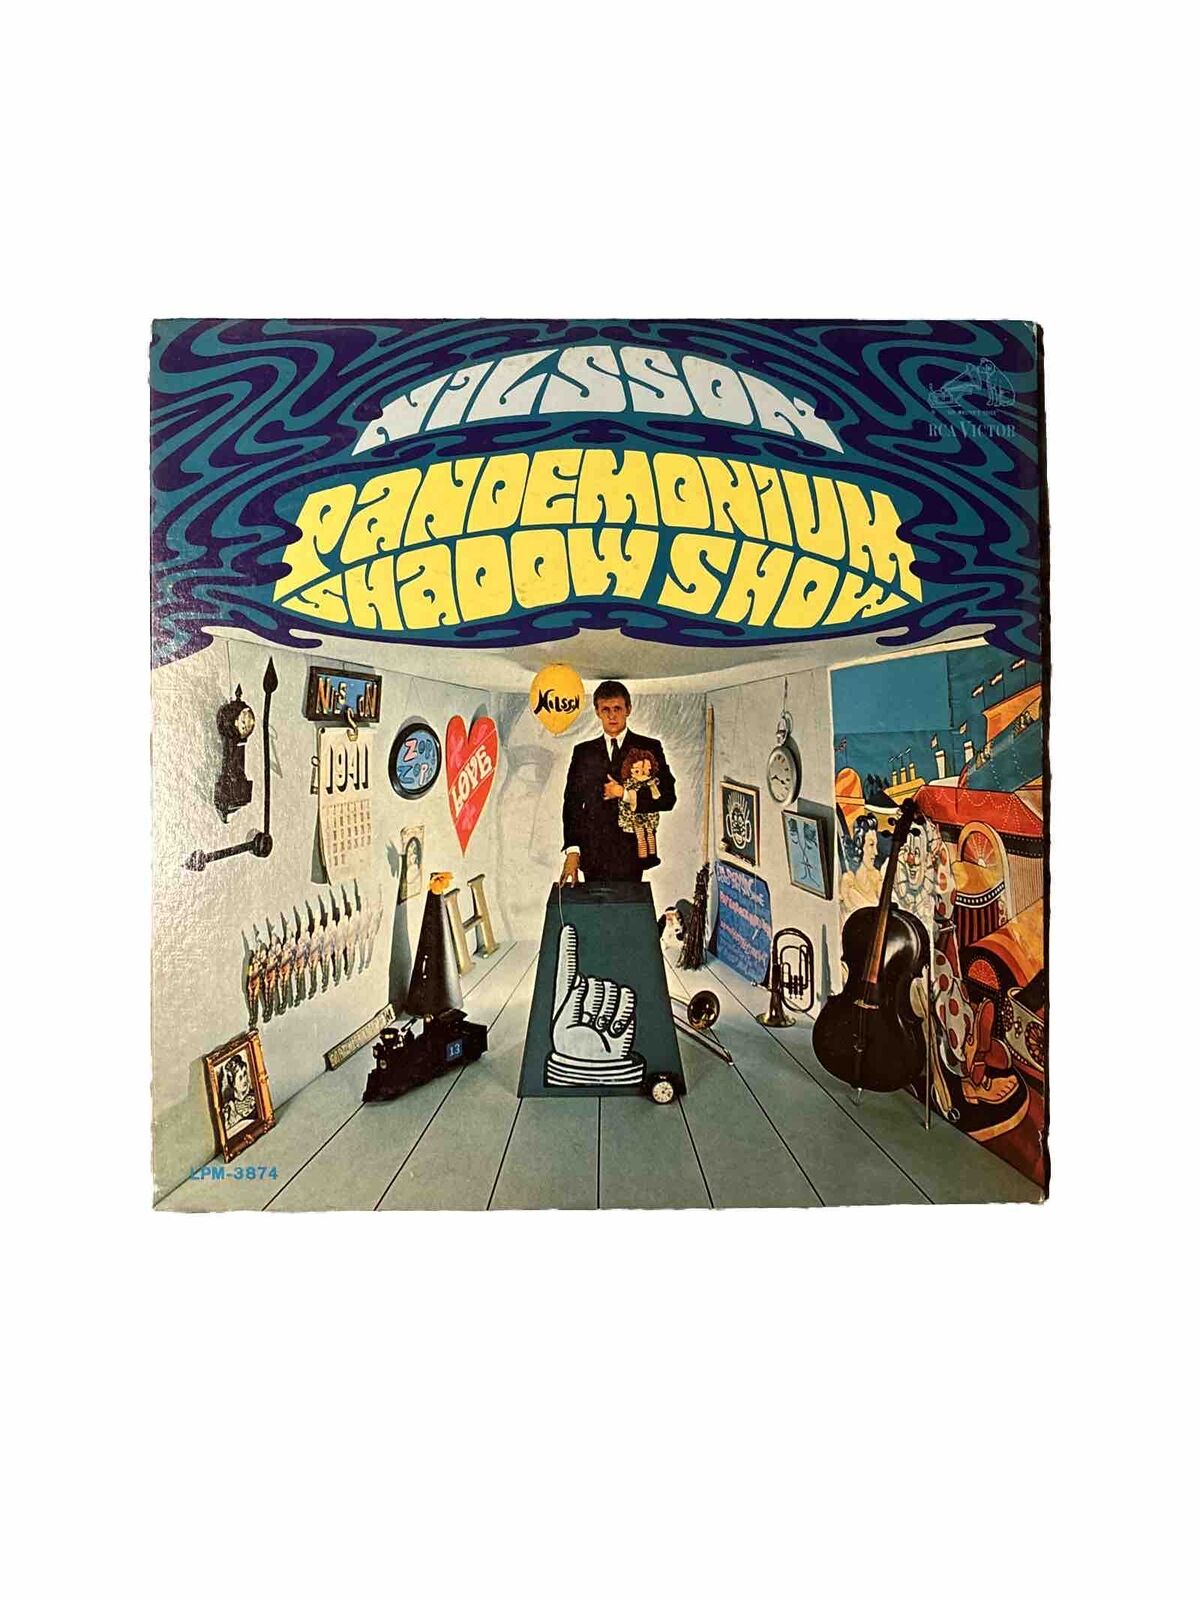 HARRY NILSSON Pandemonium Shadow Show RCA LSP-3874 LP promo